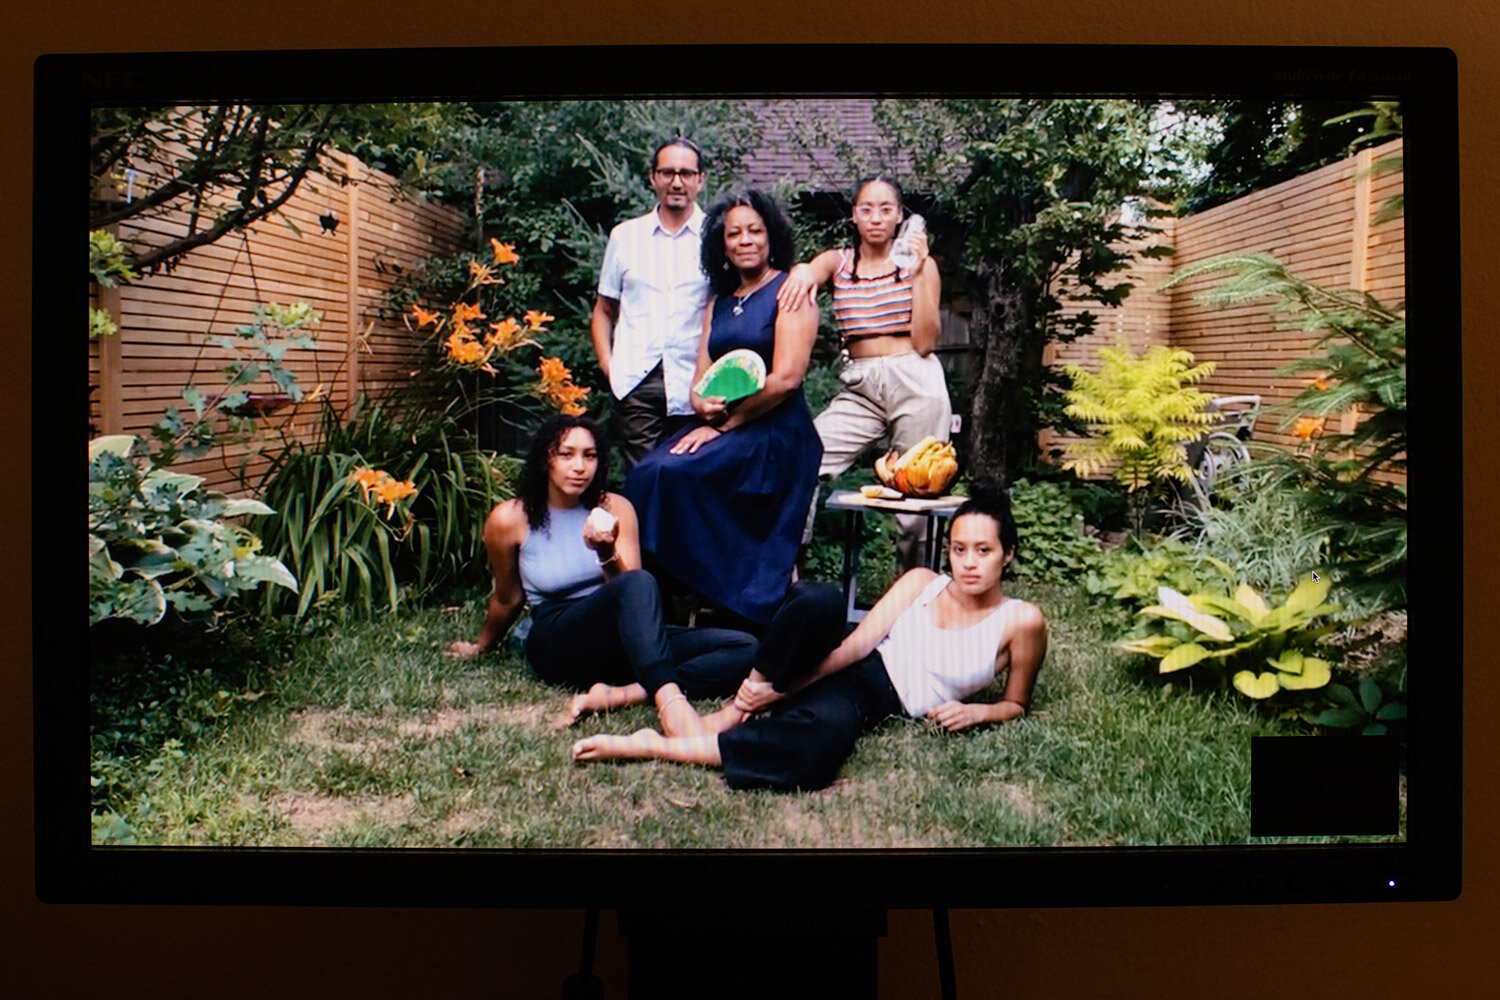  Saul, Ybelia, Jamila, Inti &amp; Dania Noritz-Reyes via FaceTime in Toronto, July 2020. 